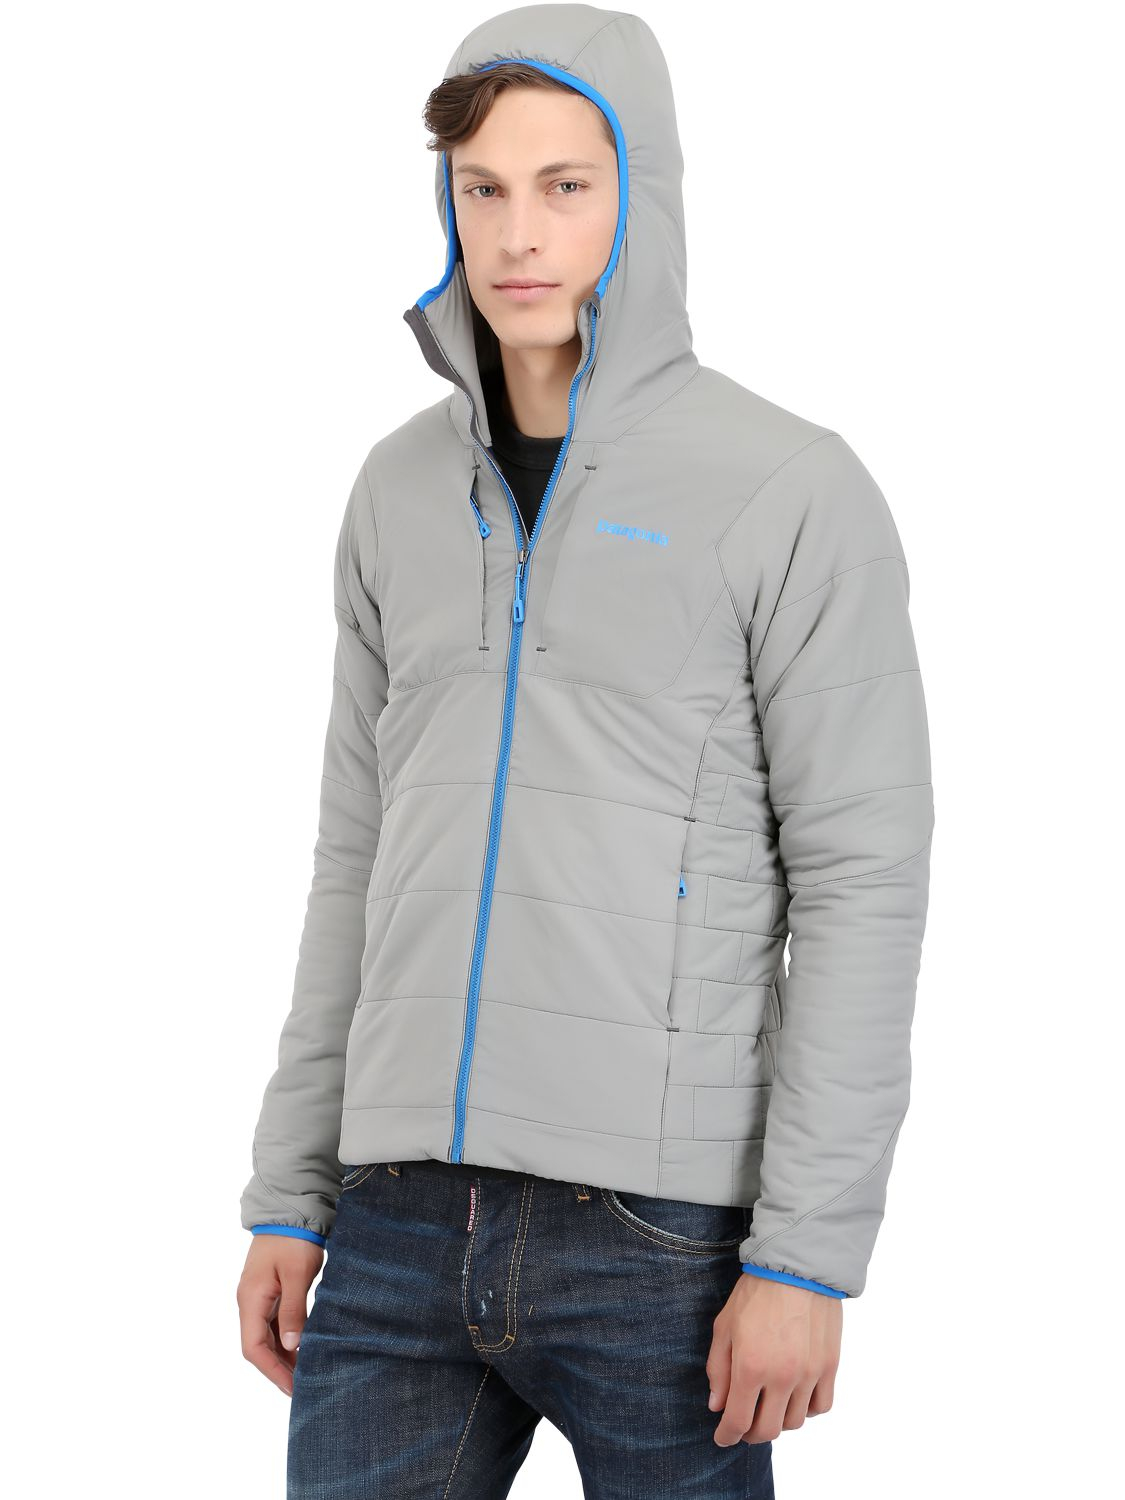 Patagonia Nano-Air Hoody Ripstop Nylon Jacket in Grey (Gray) for Men - Lyst